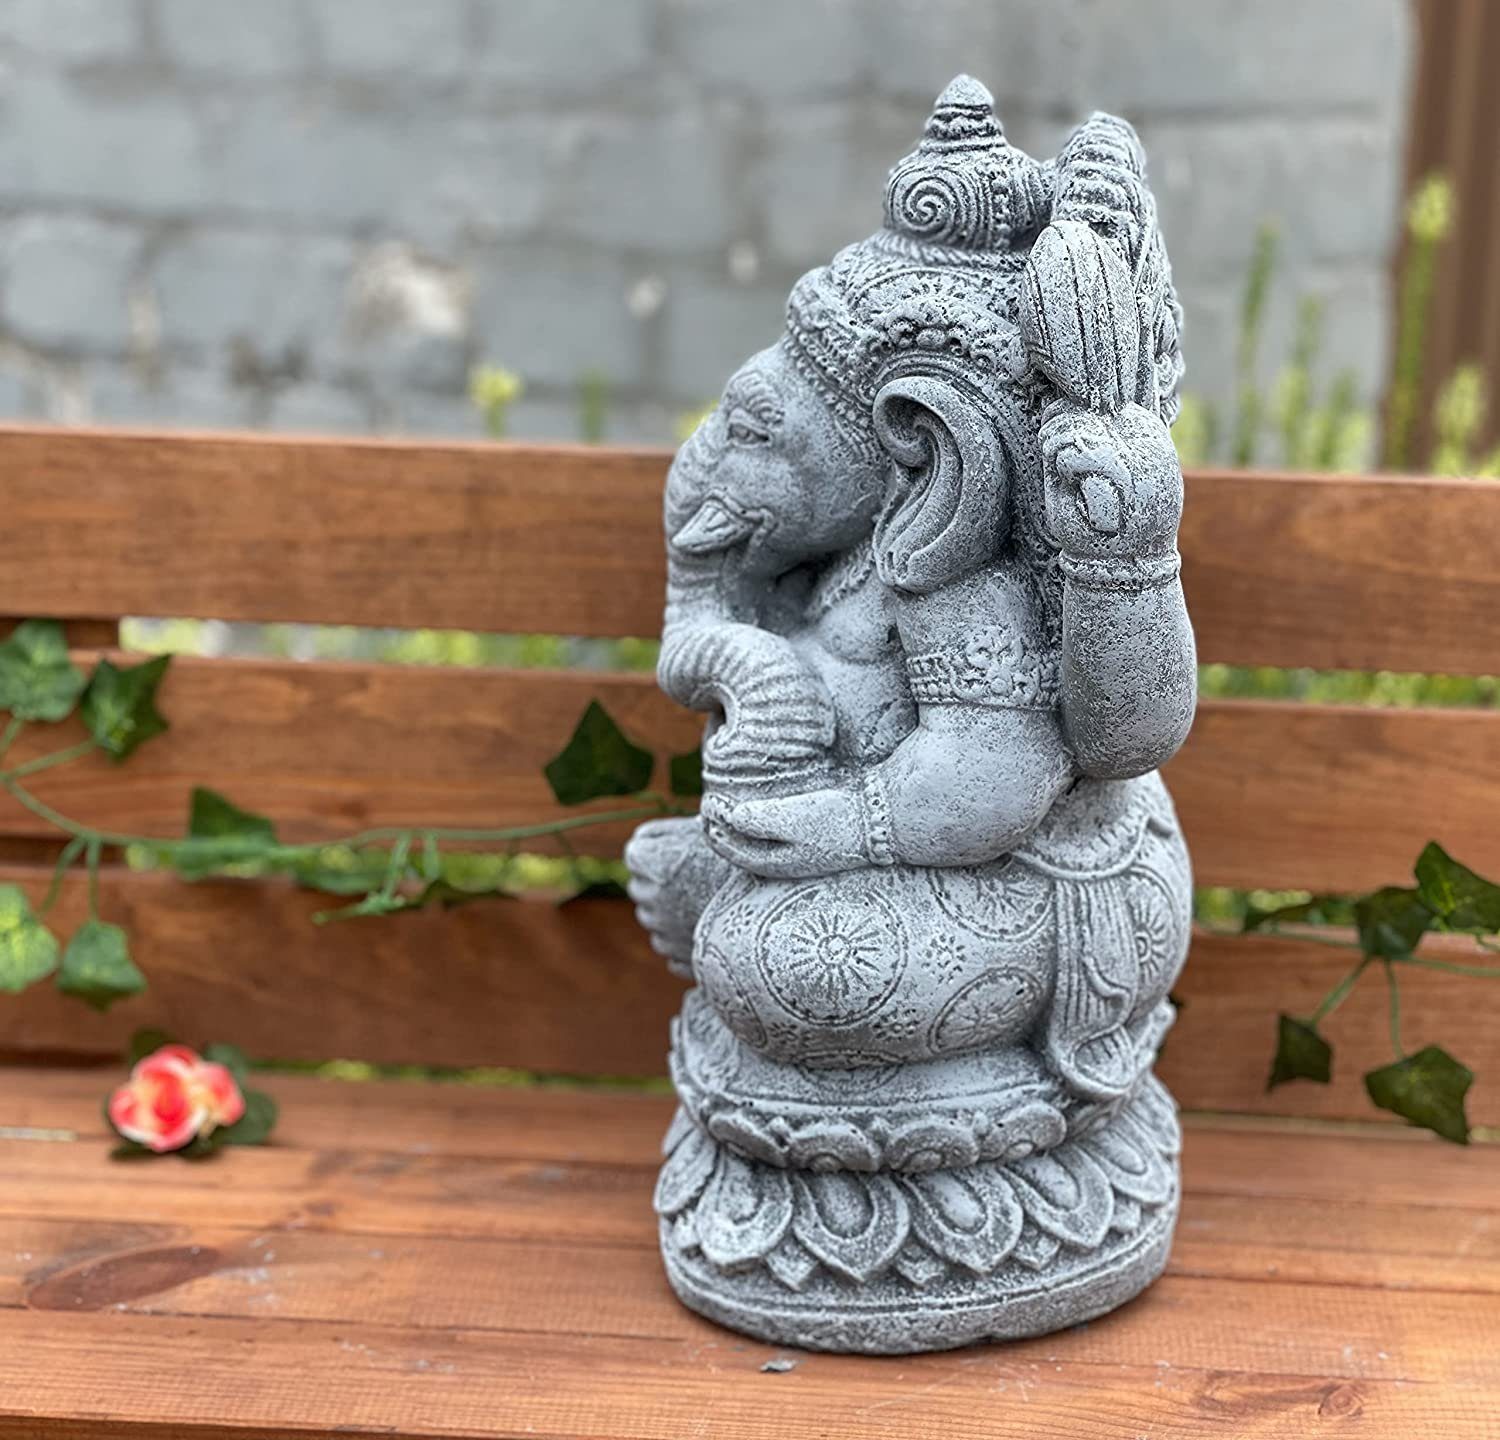 Gartenfigur Style and Ganesha Statue Stone